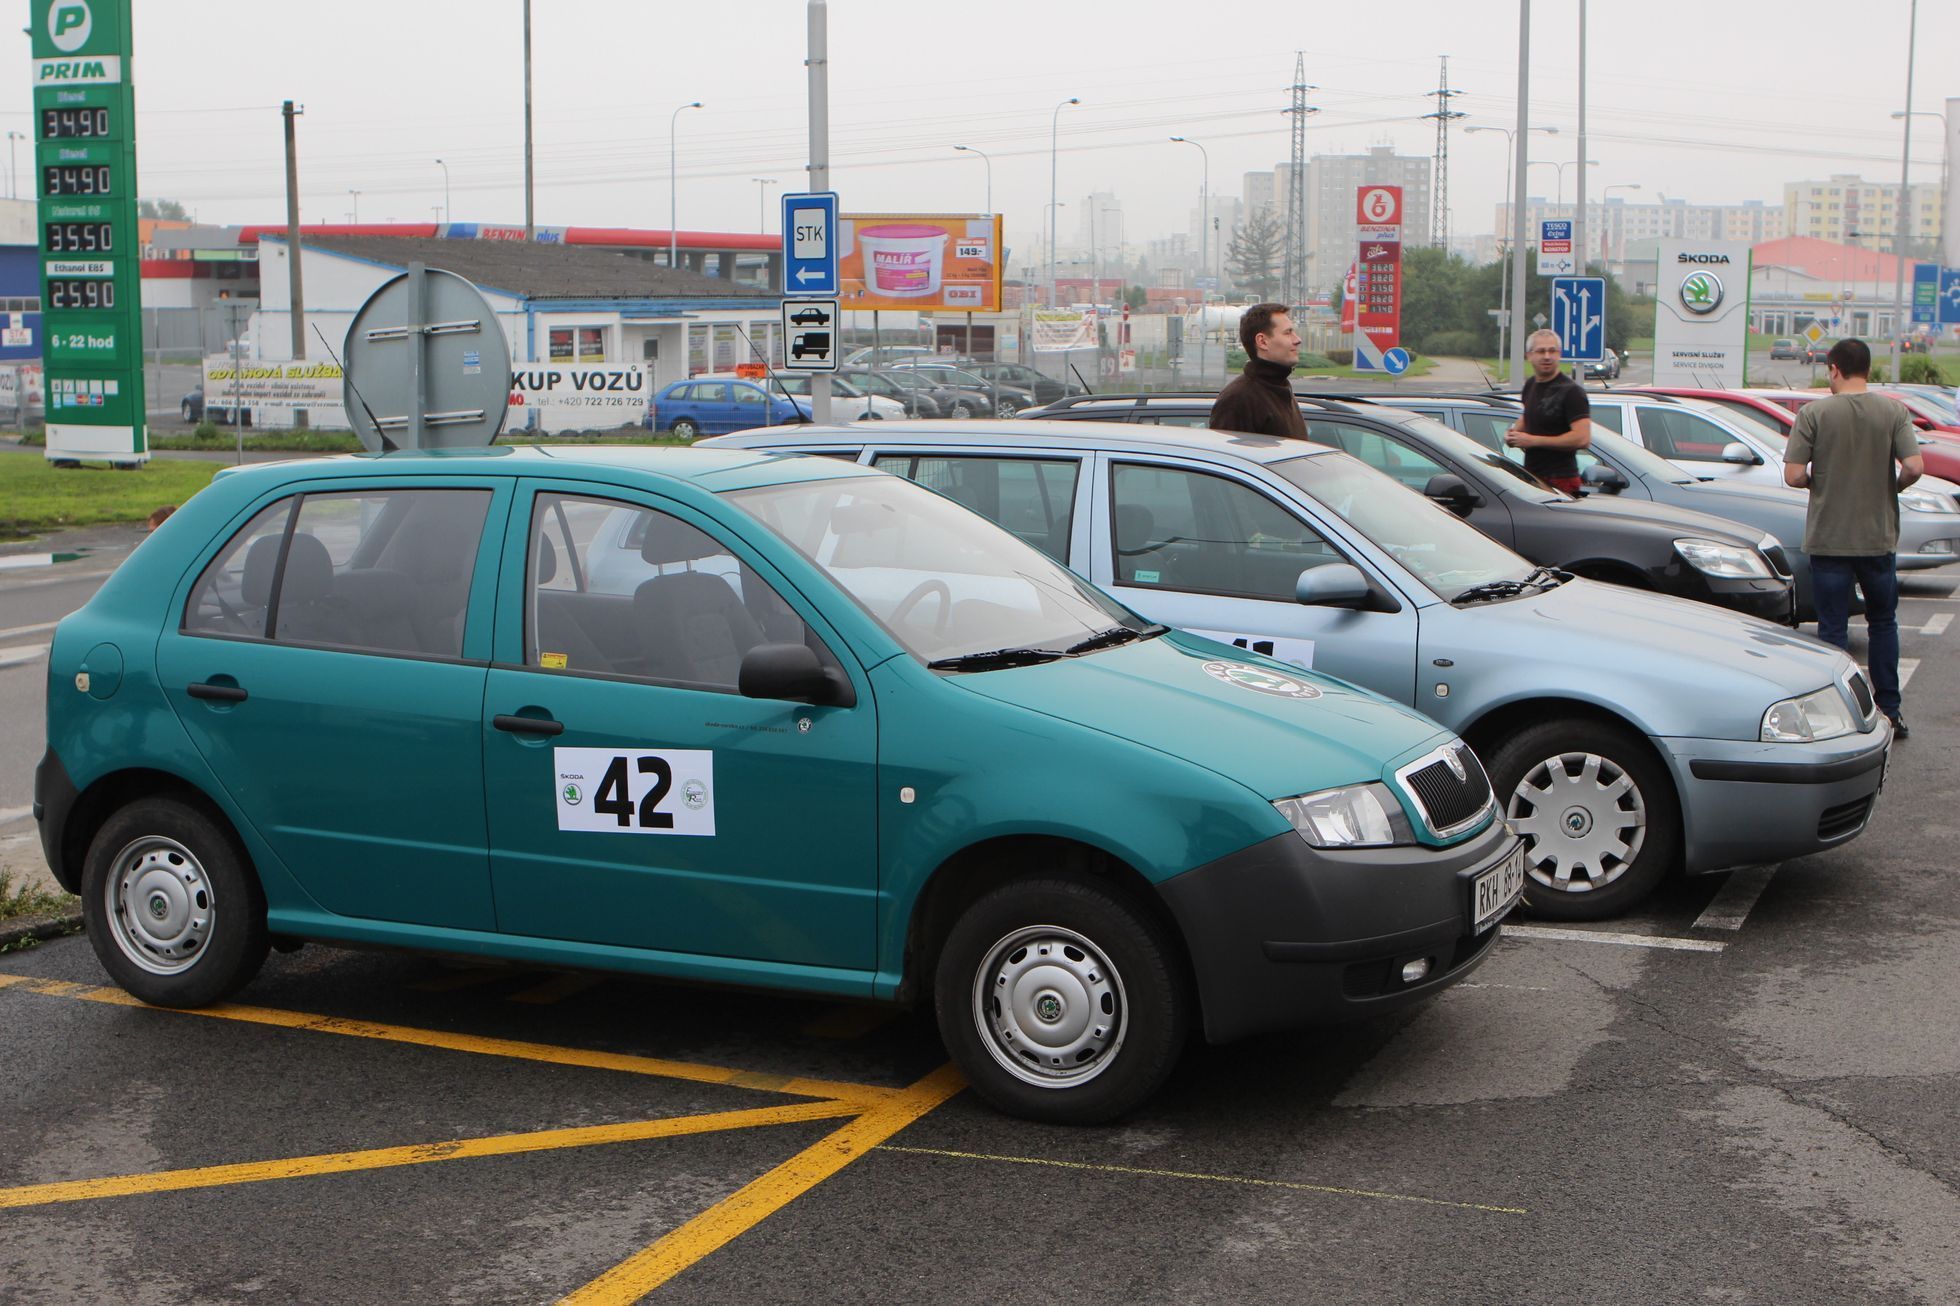 Škoda economy run 2014 - ekonomický vůz